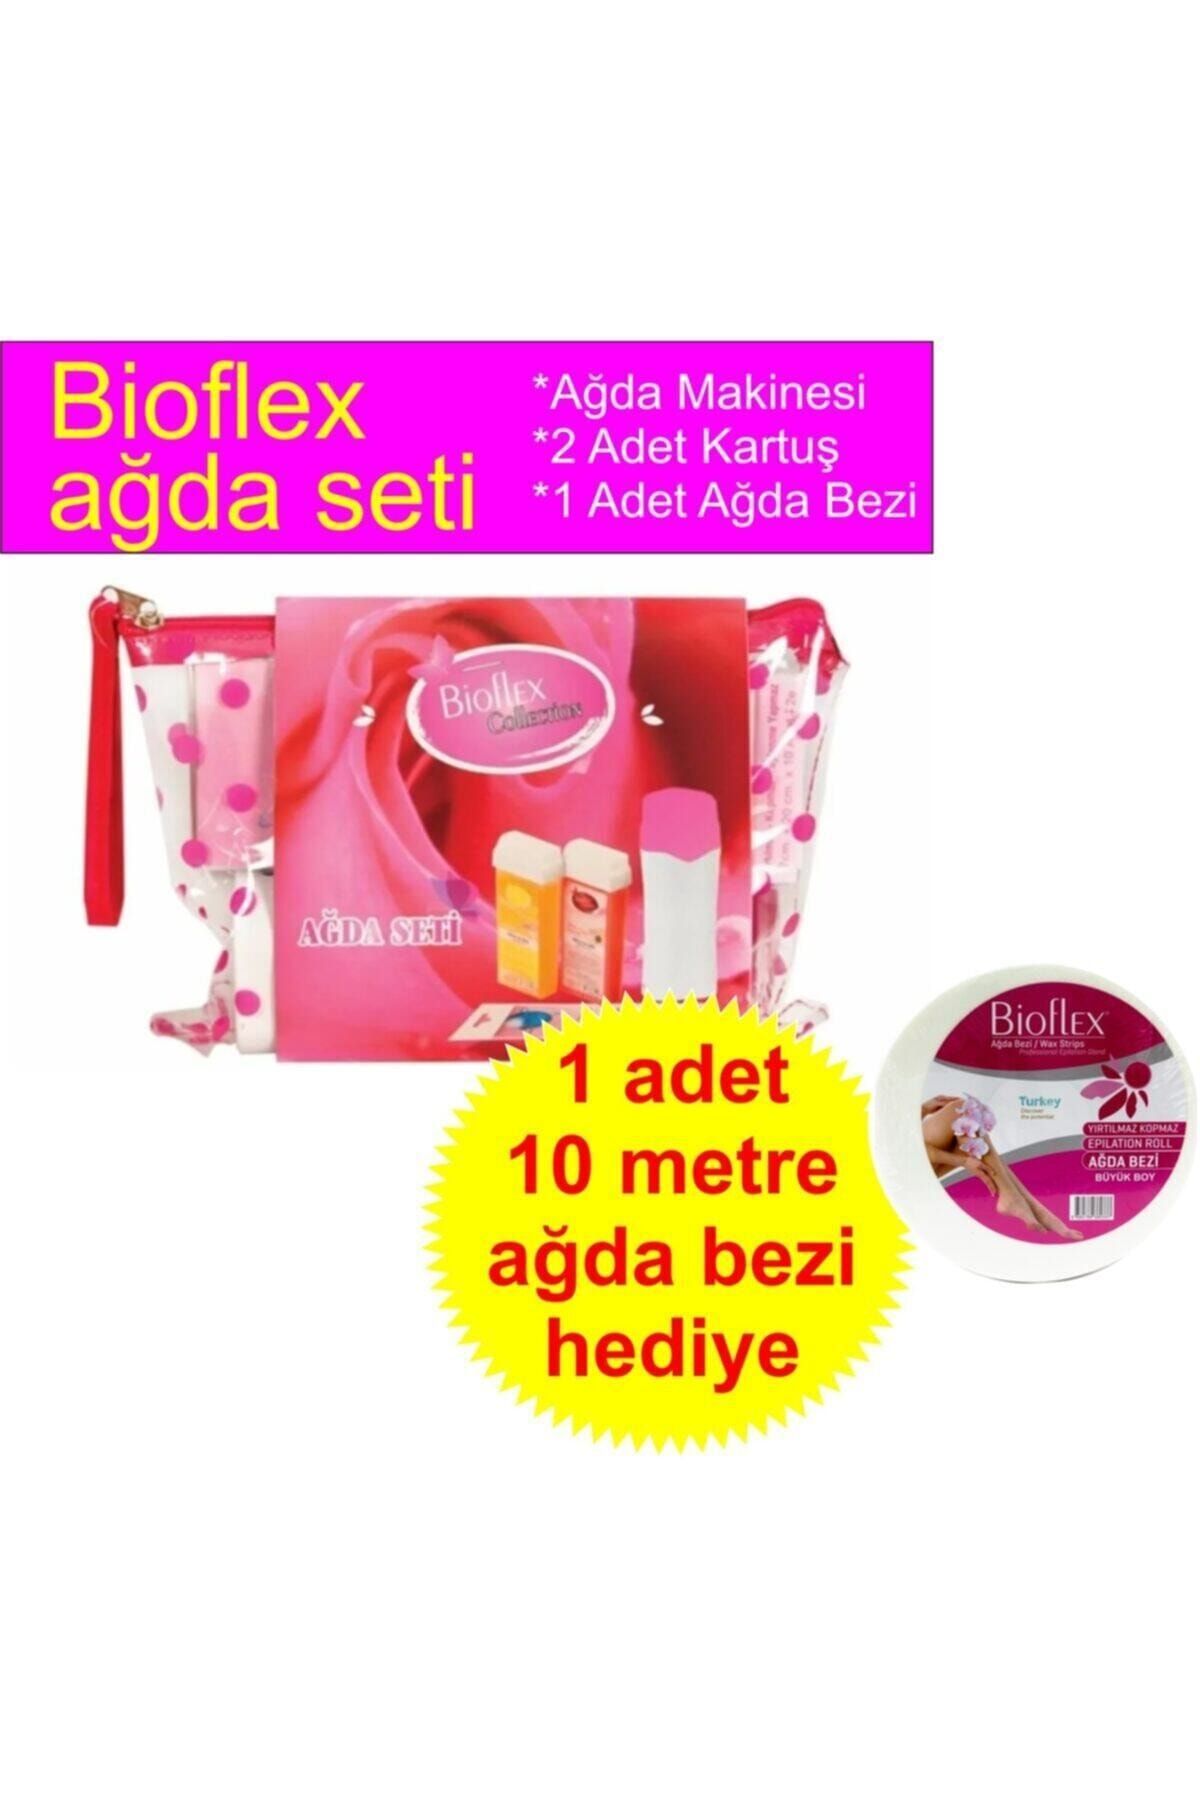 Bioflex Biofleks Ağda Makinesi + 2 Adet Kartuş + 1 Adet Ağda Bezi + 1 Adet 10 Metre Ağda Bezi Hediye